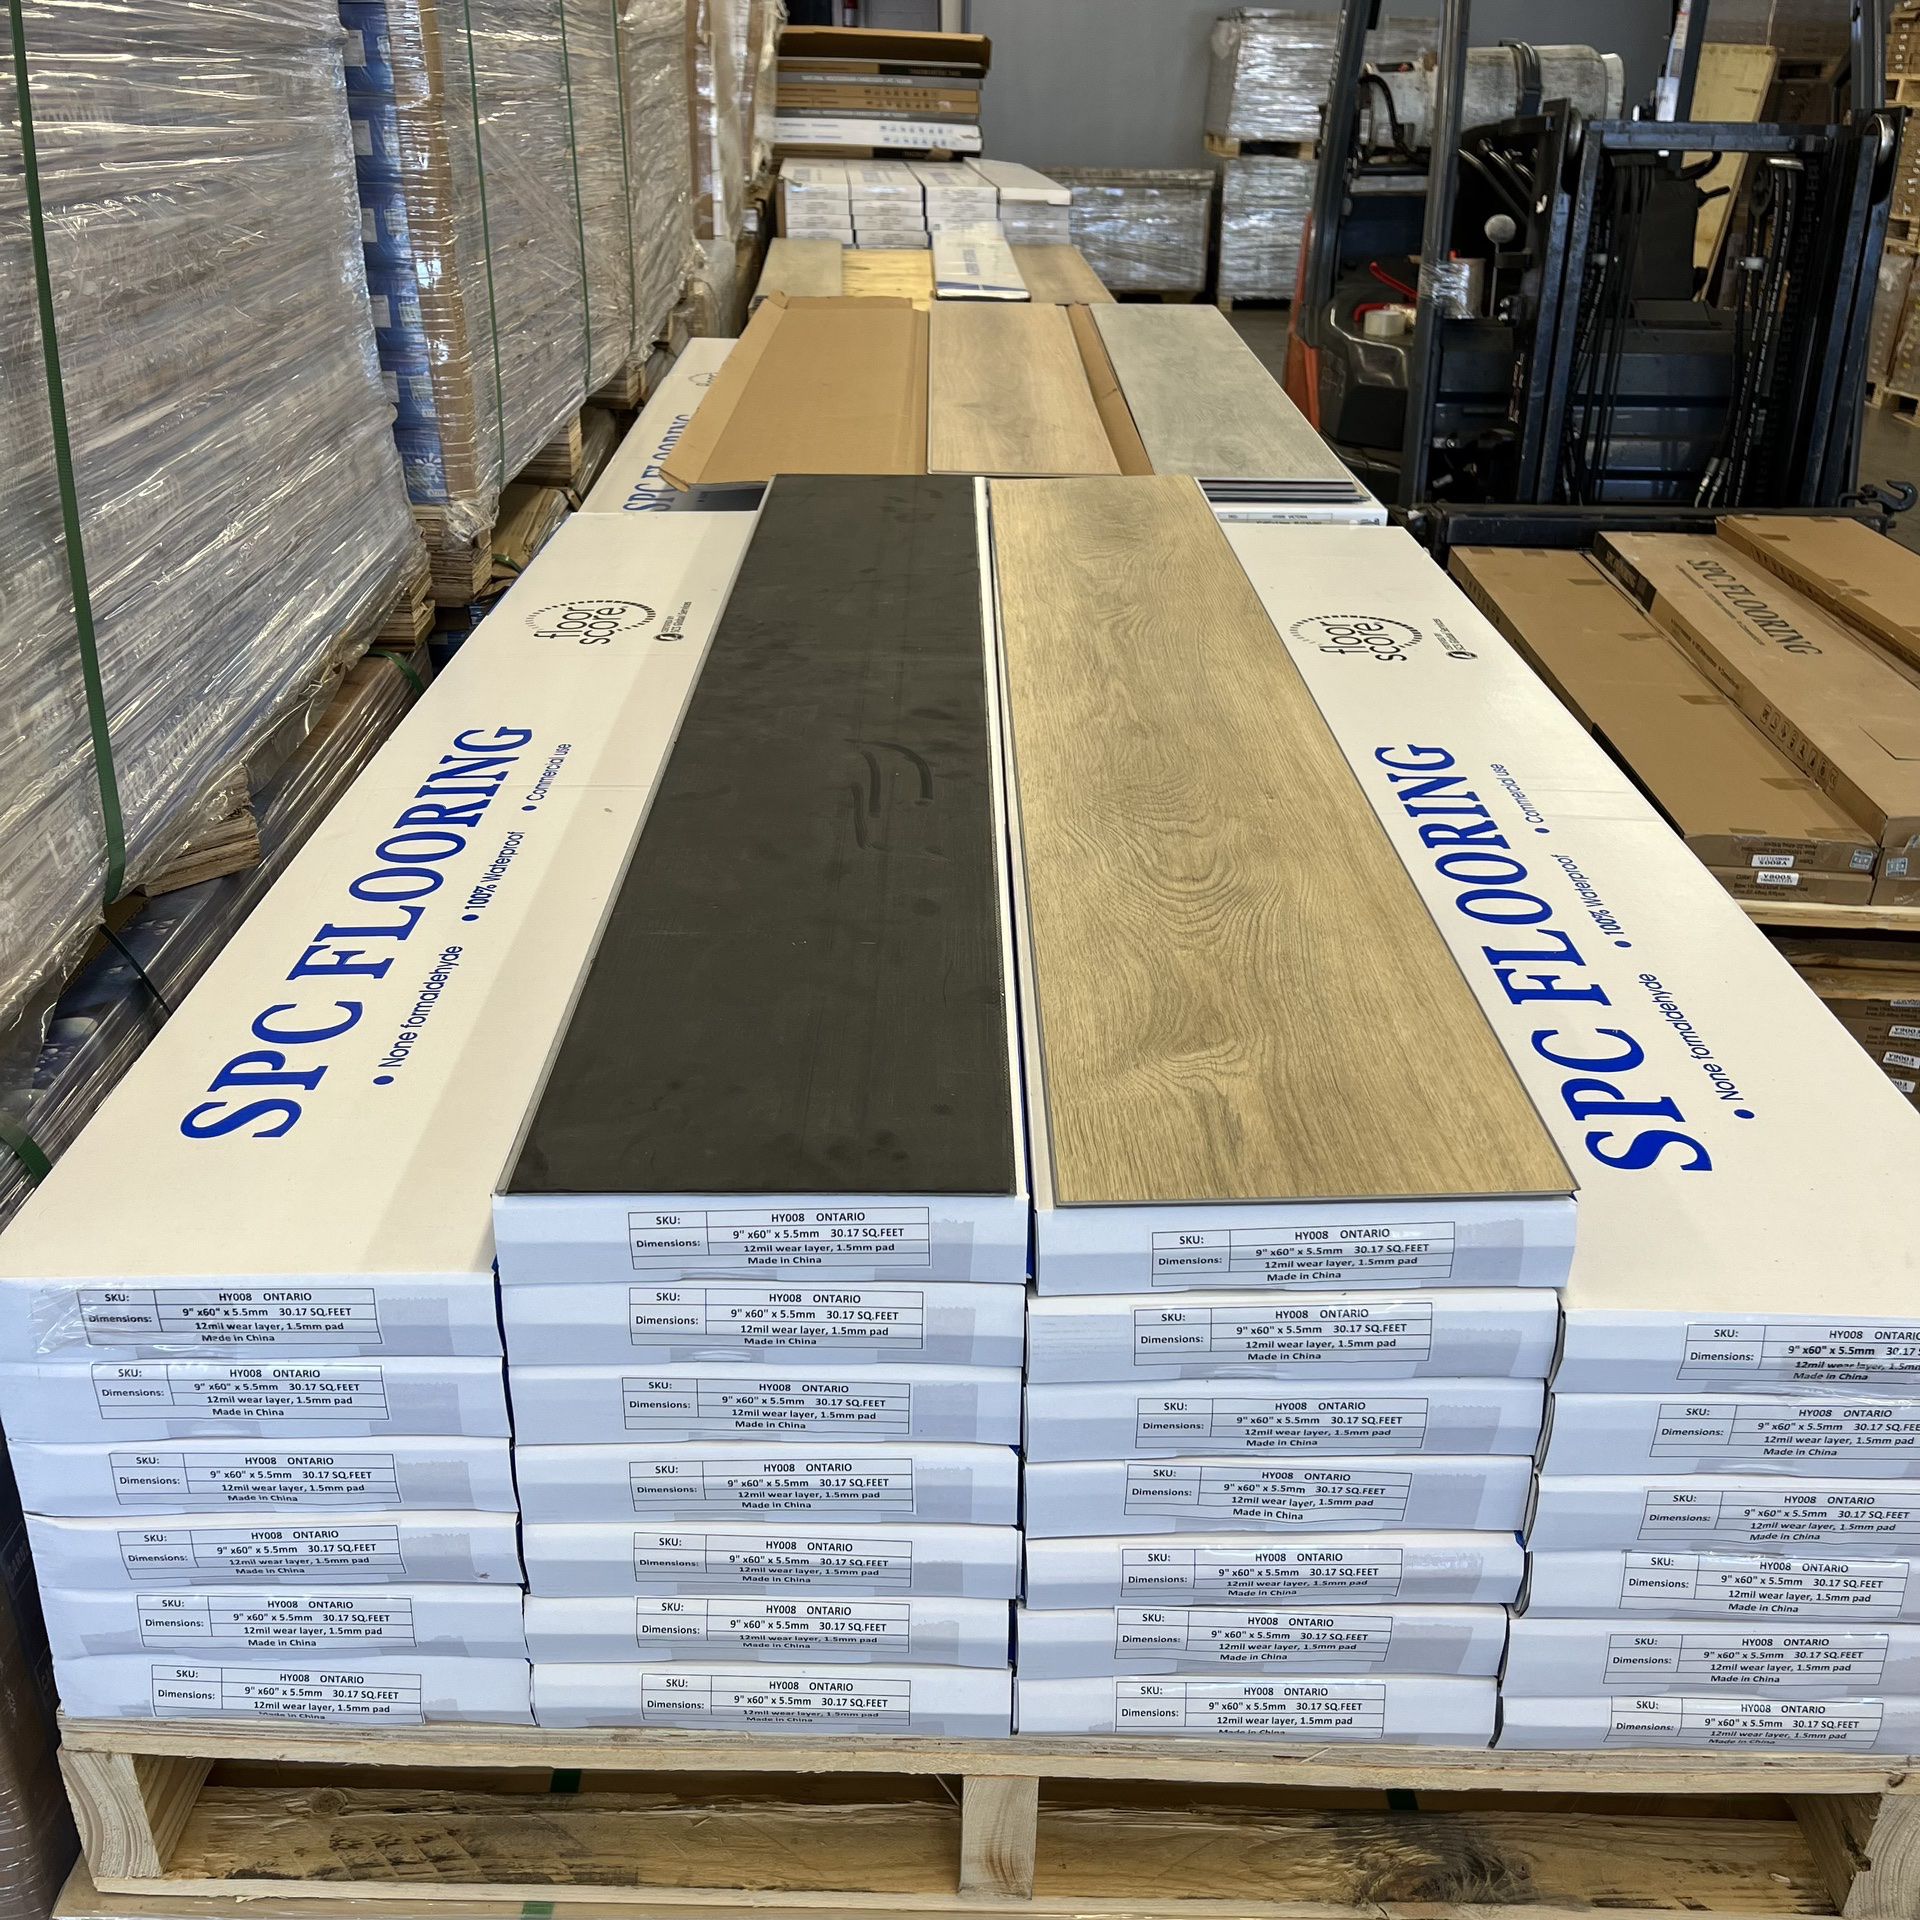 Up $0.79/sq ft 5.5mm~10mm Luxury Vinyl Plank Flooring SPC Flooring Click Locked Wholesale Price